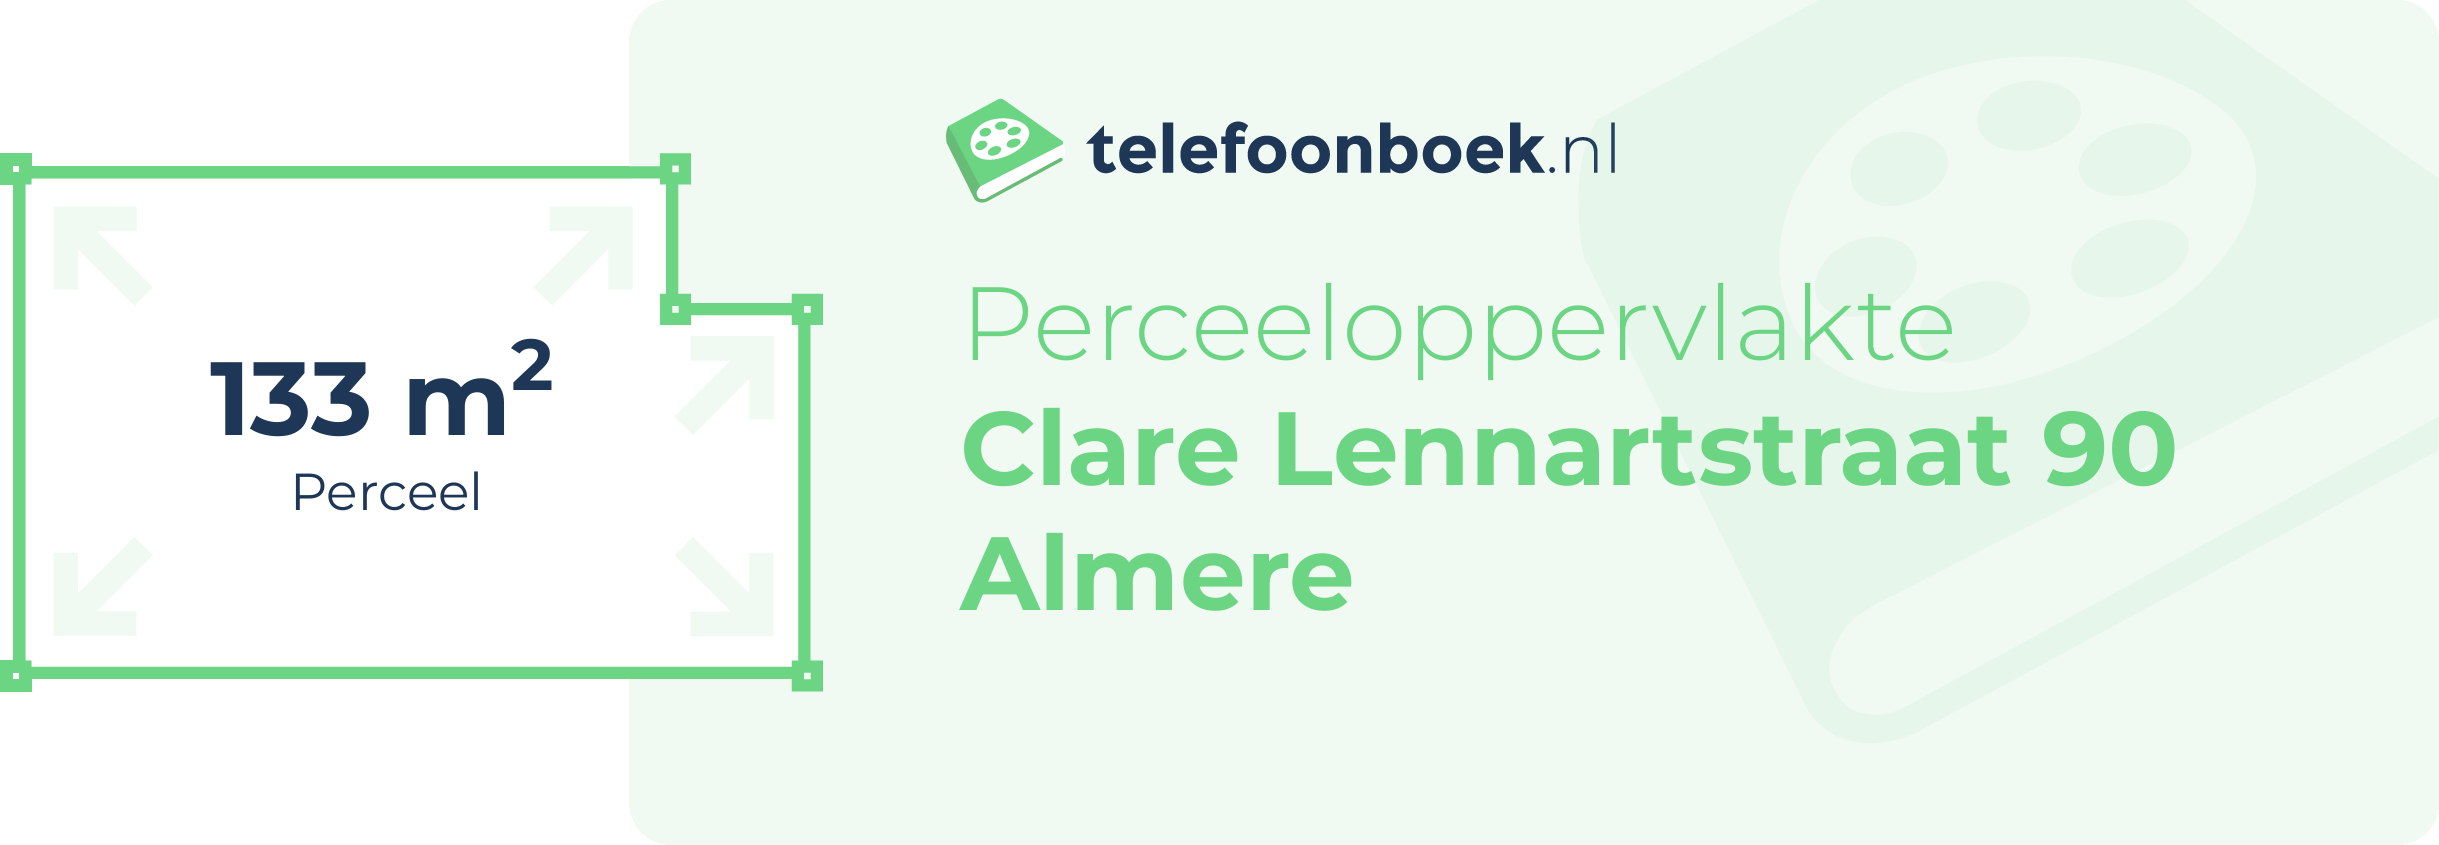 Perceeloppervlakte Clare Lennartstraat 90 Almere